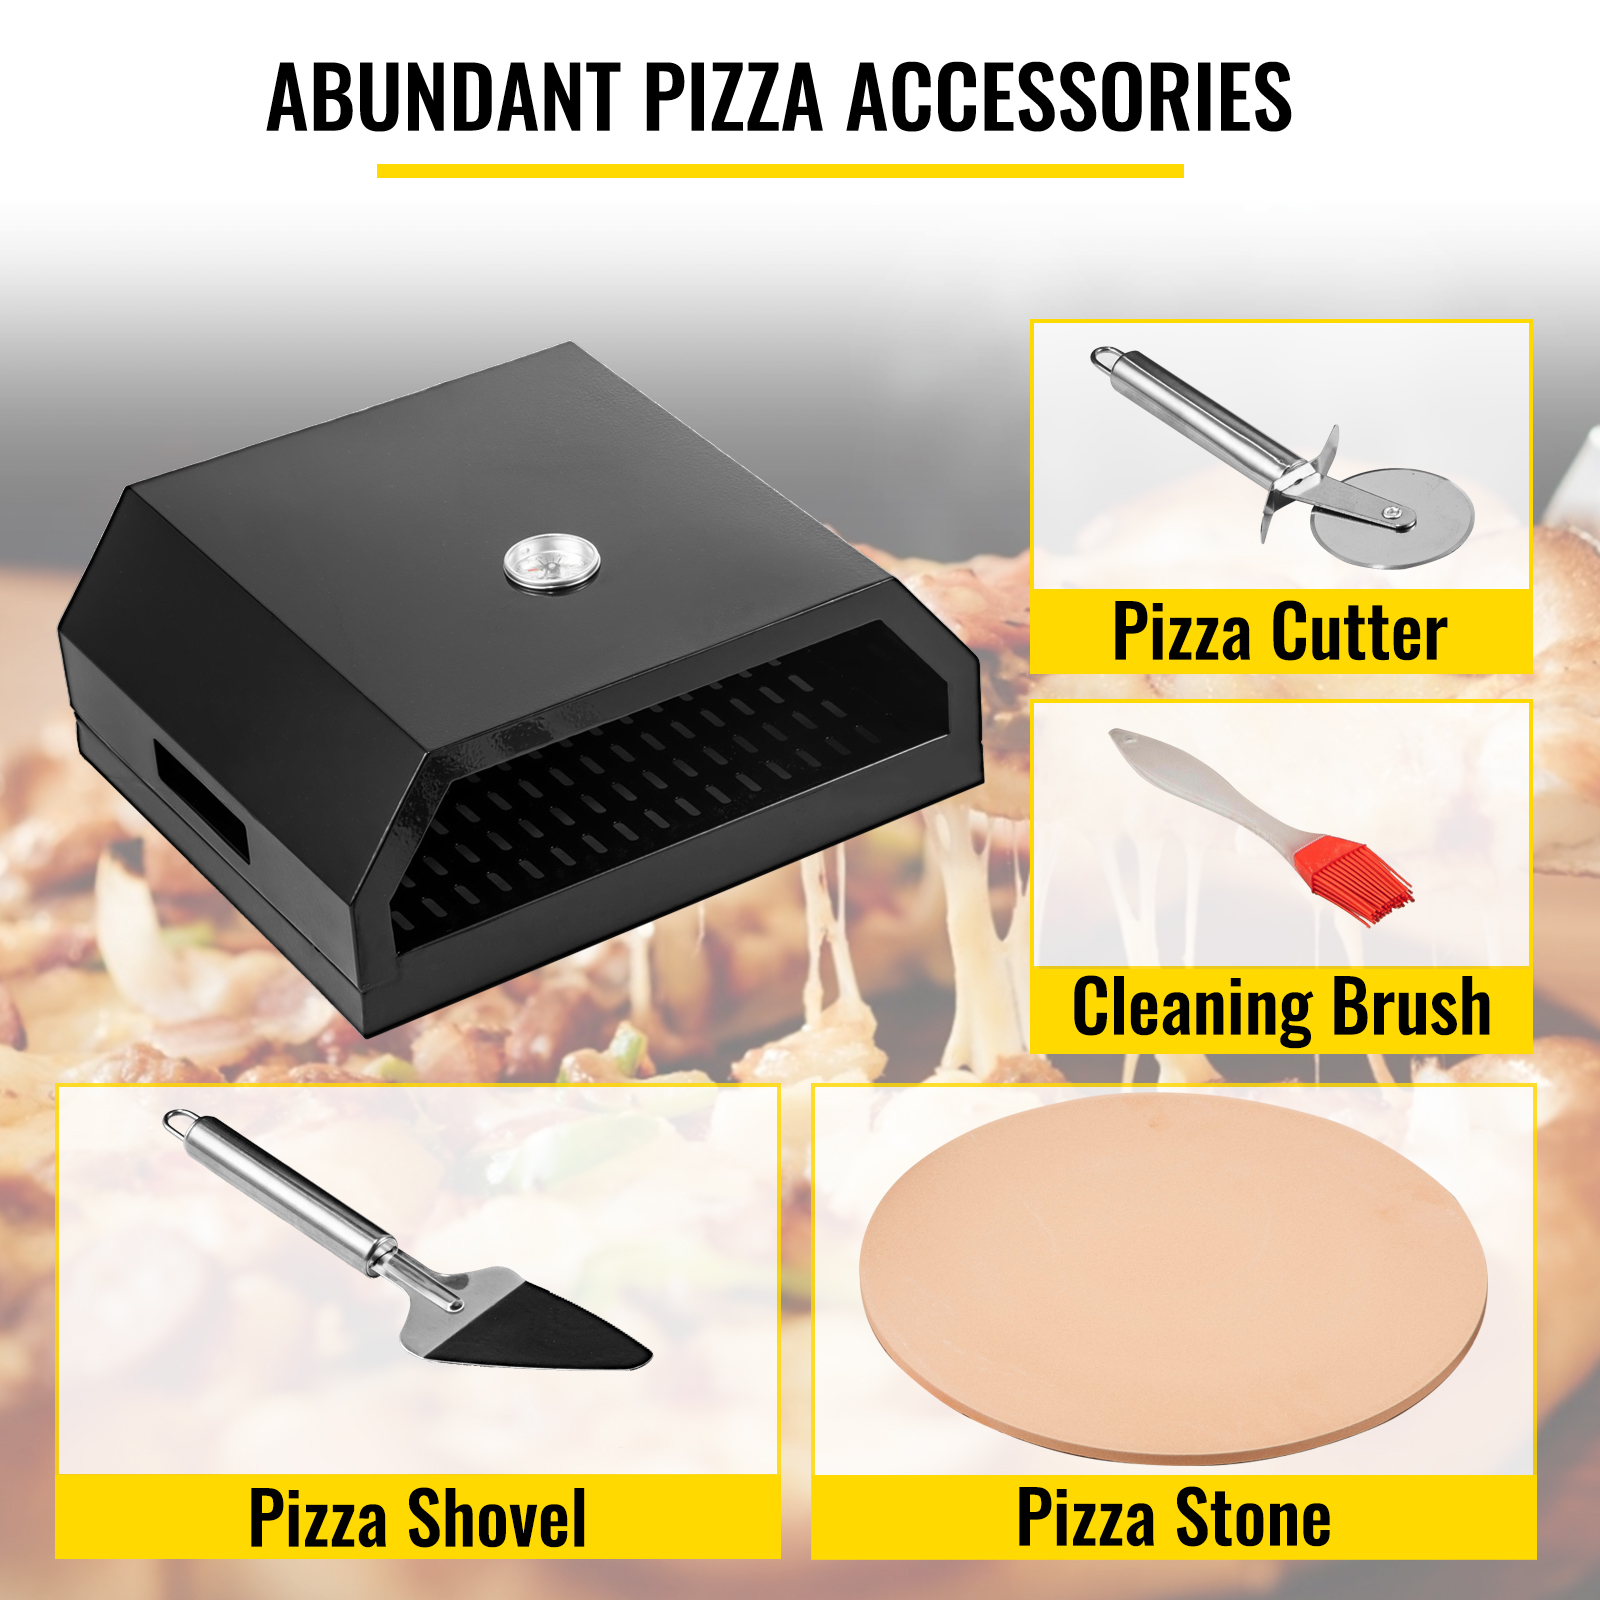 Pizza Supplies, Equipment, & Accessories